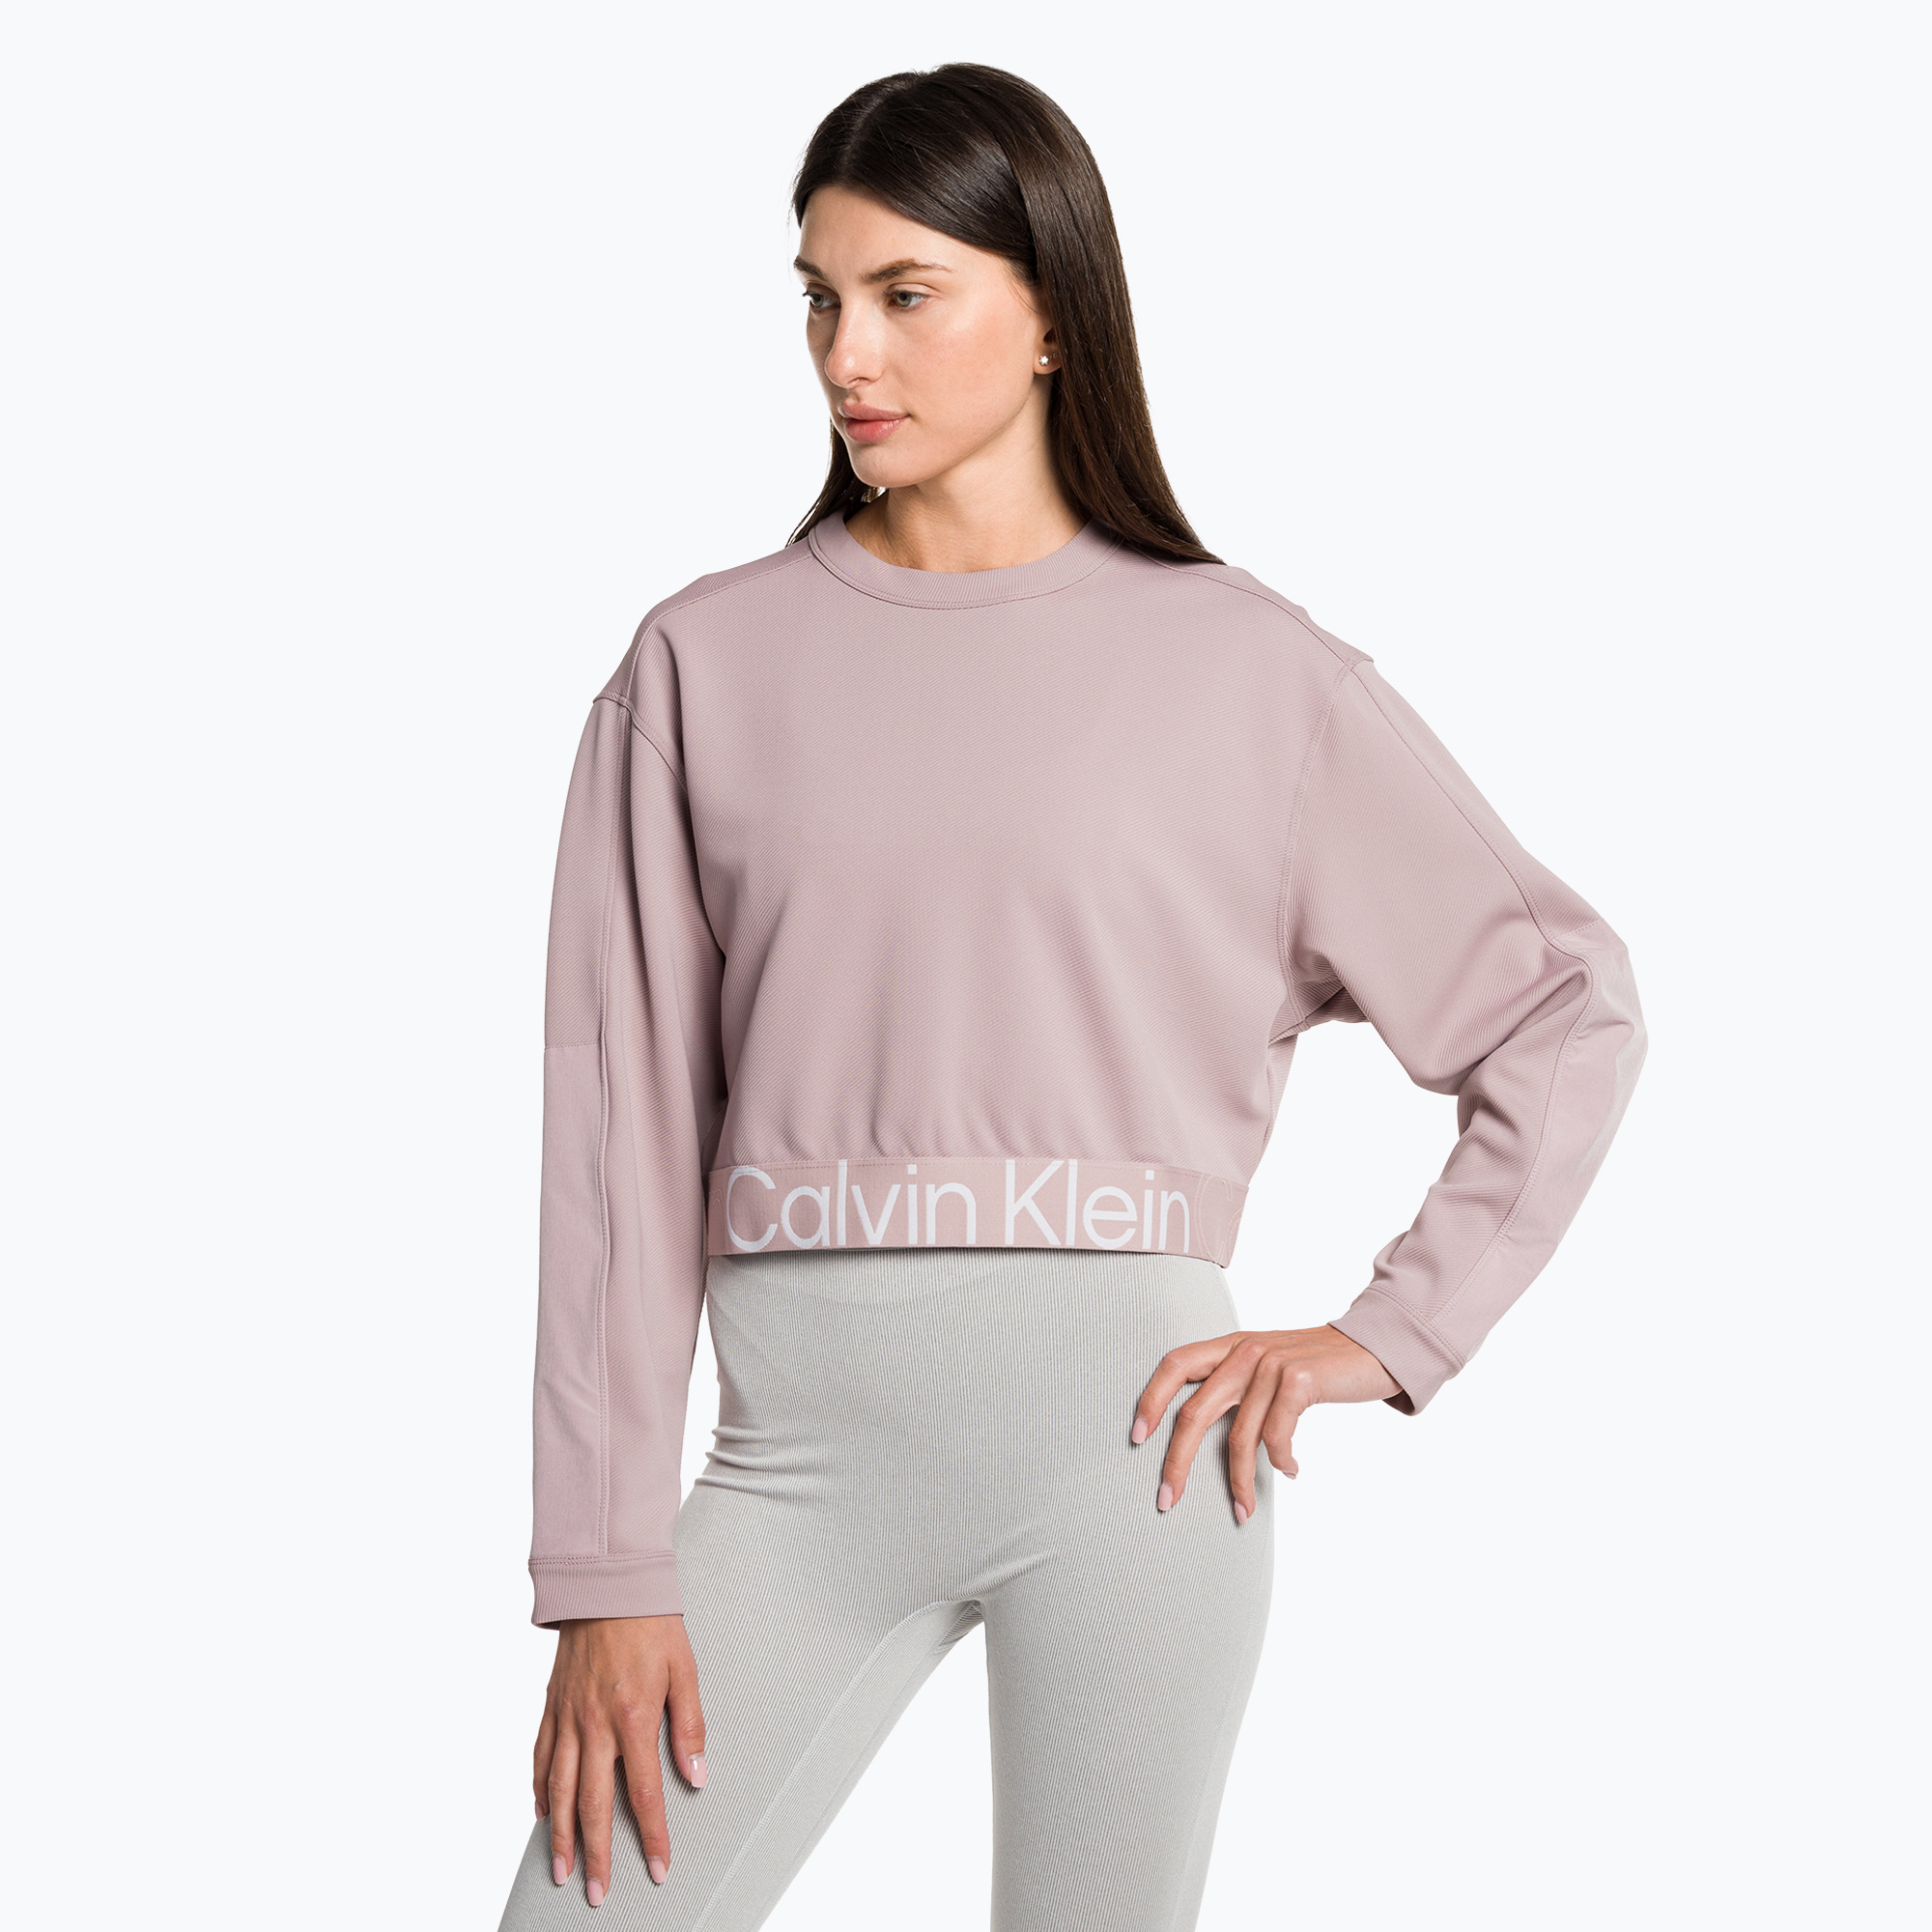 Дамски пуловер Calvin Klein Pullover sweatshirt gray rose